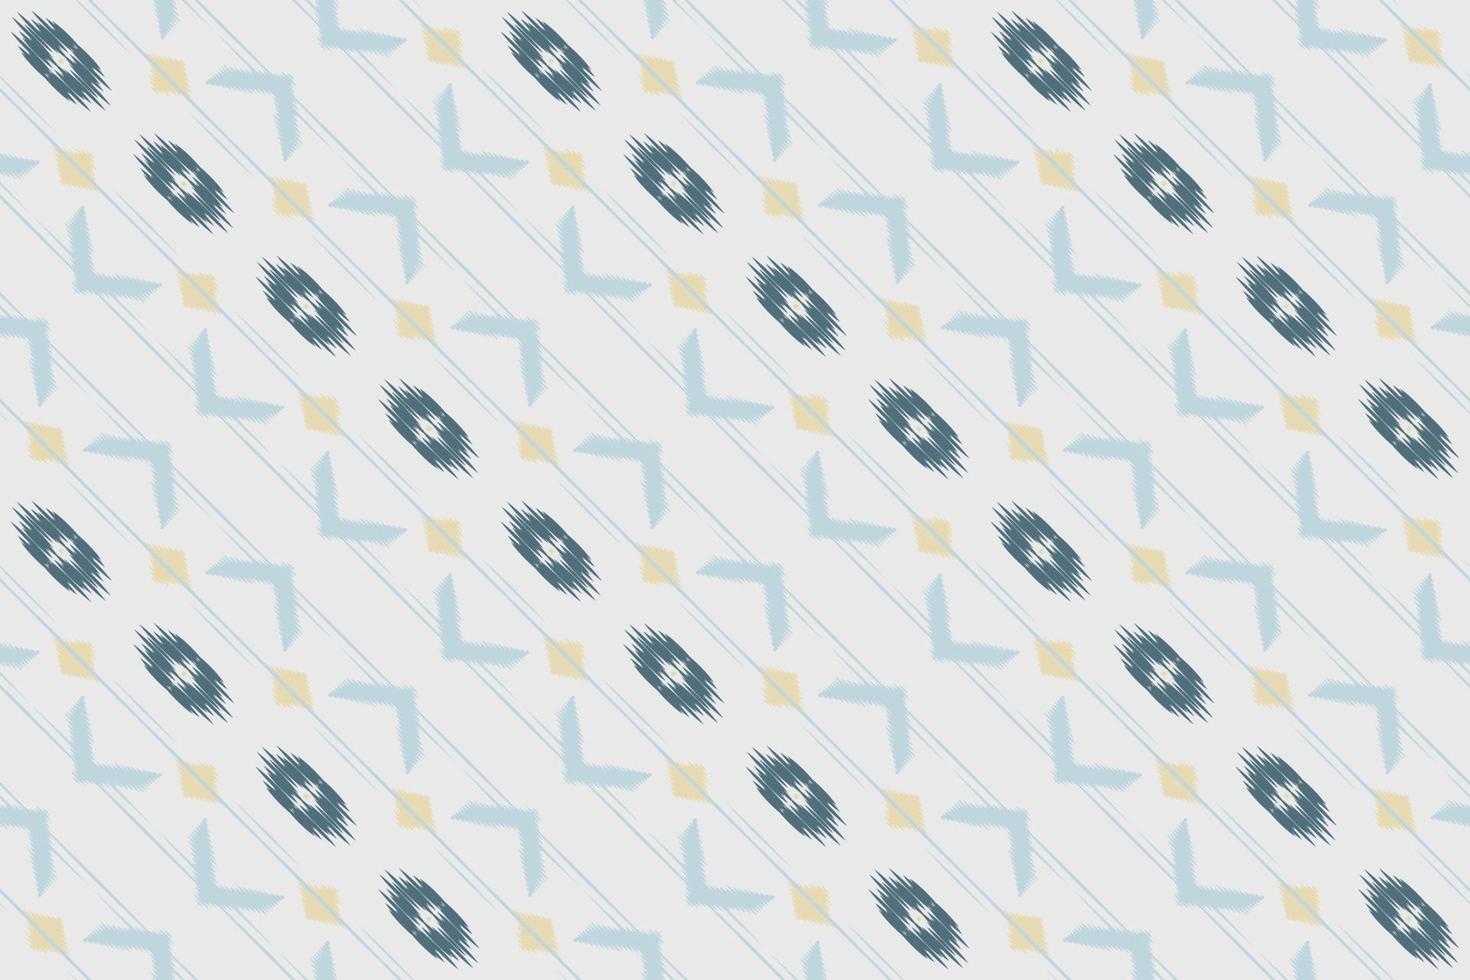 batik motivo textil textura ikat patrón sin costuras diseño vectorial digital para imprimir saree kurti borde de tela símbolos de pincel muestras elegantes vector